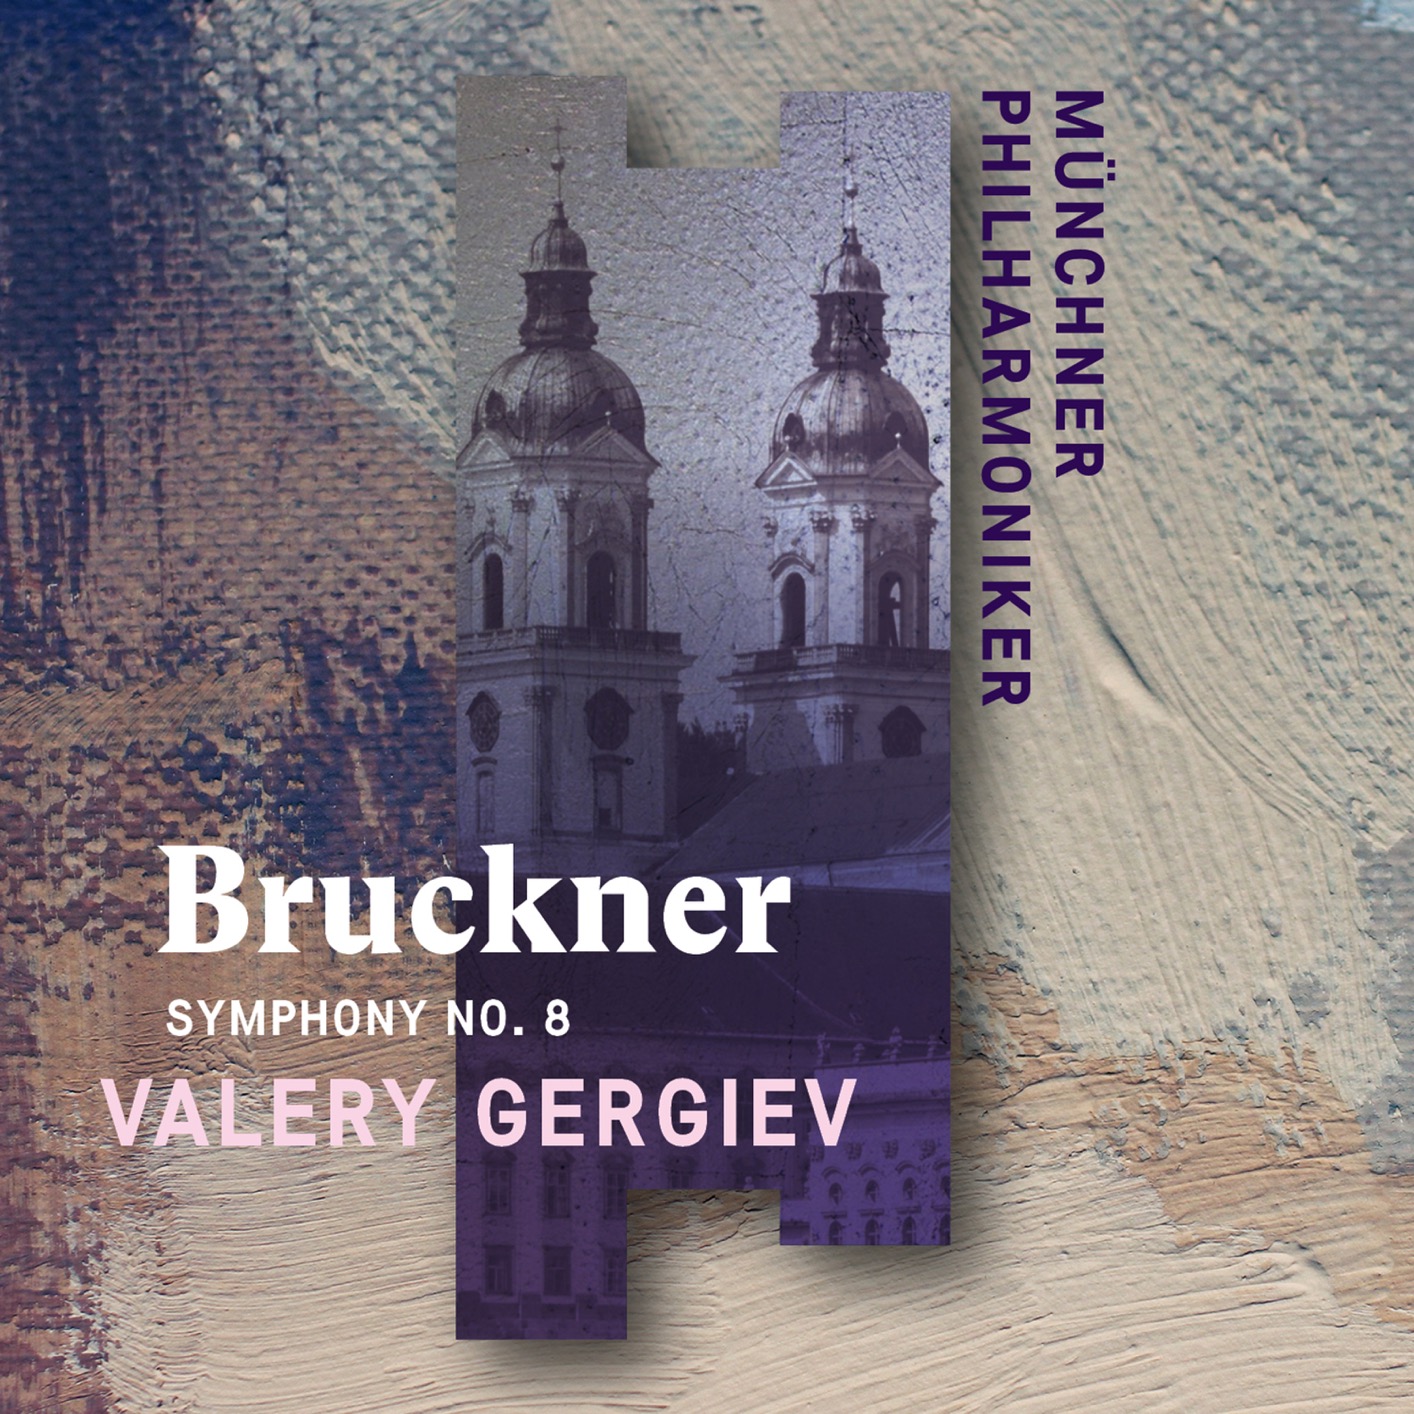 Munchner Philharmoniker & Valery Gergiev - Bruckner: Symphony No. 8 (Live) (2019) [FLAC 24bit/96kHz]